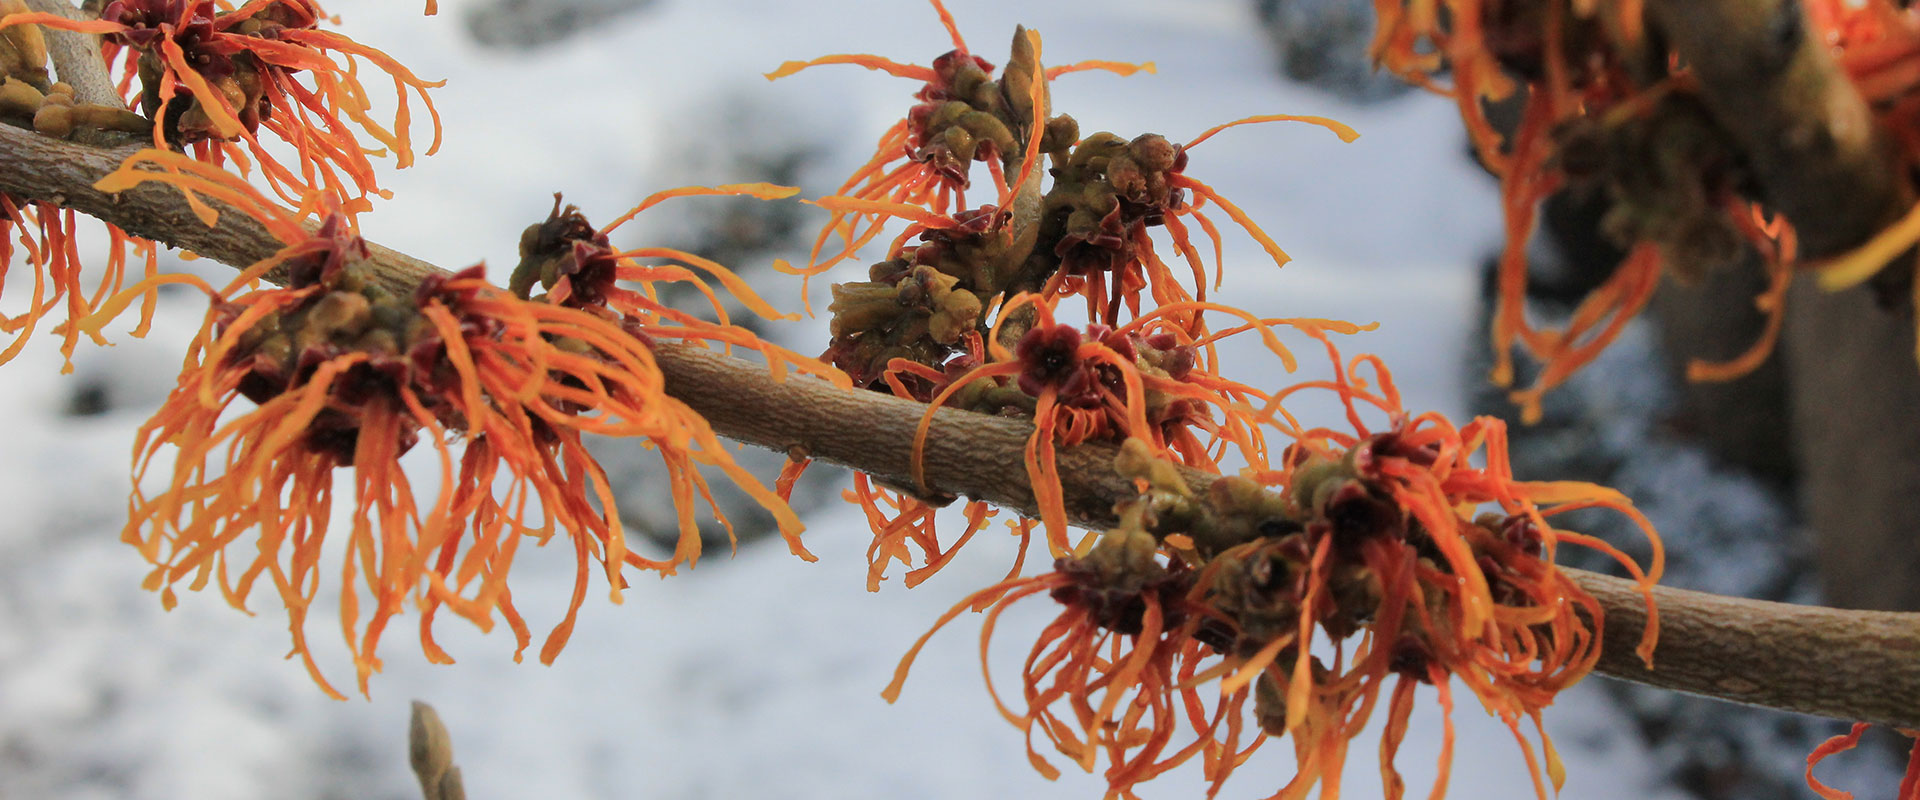 orange witch hazel blooms in the snow